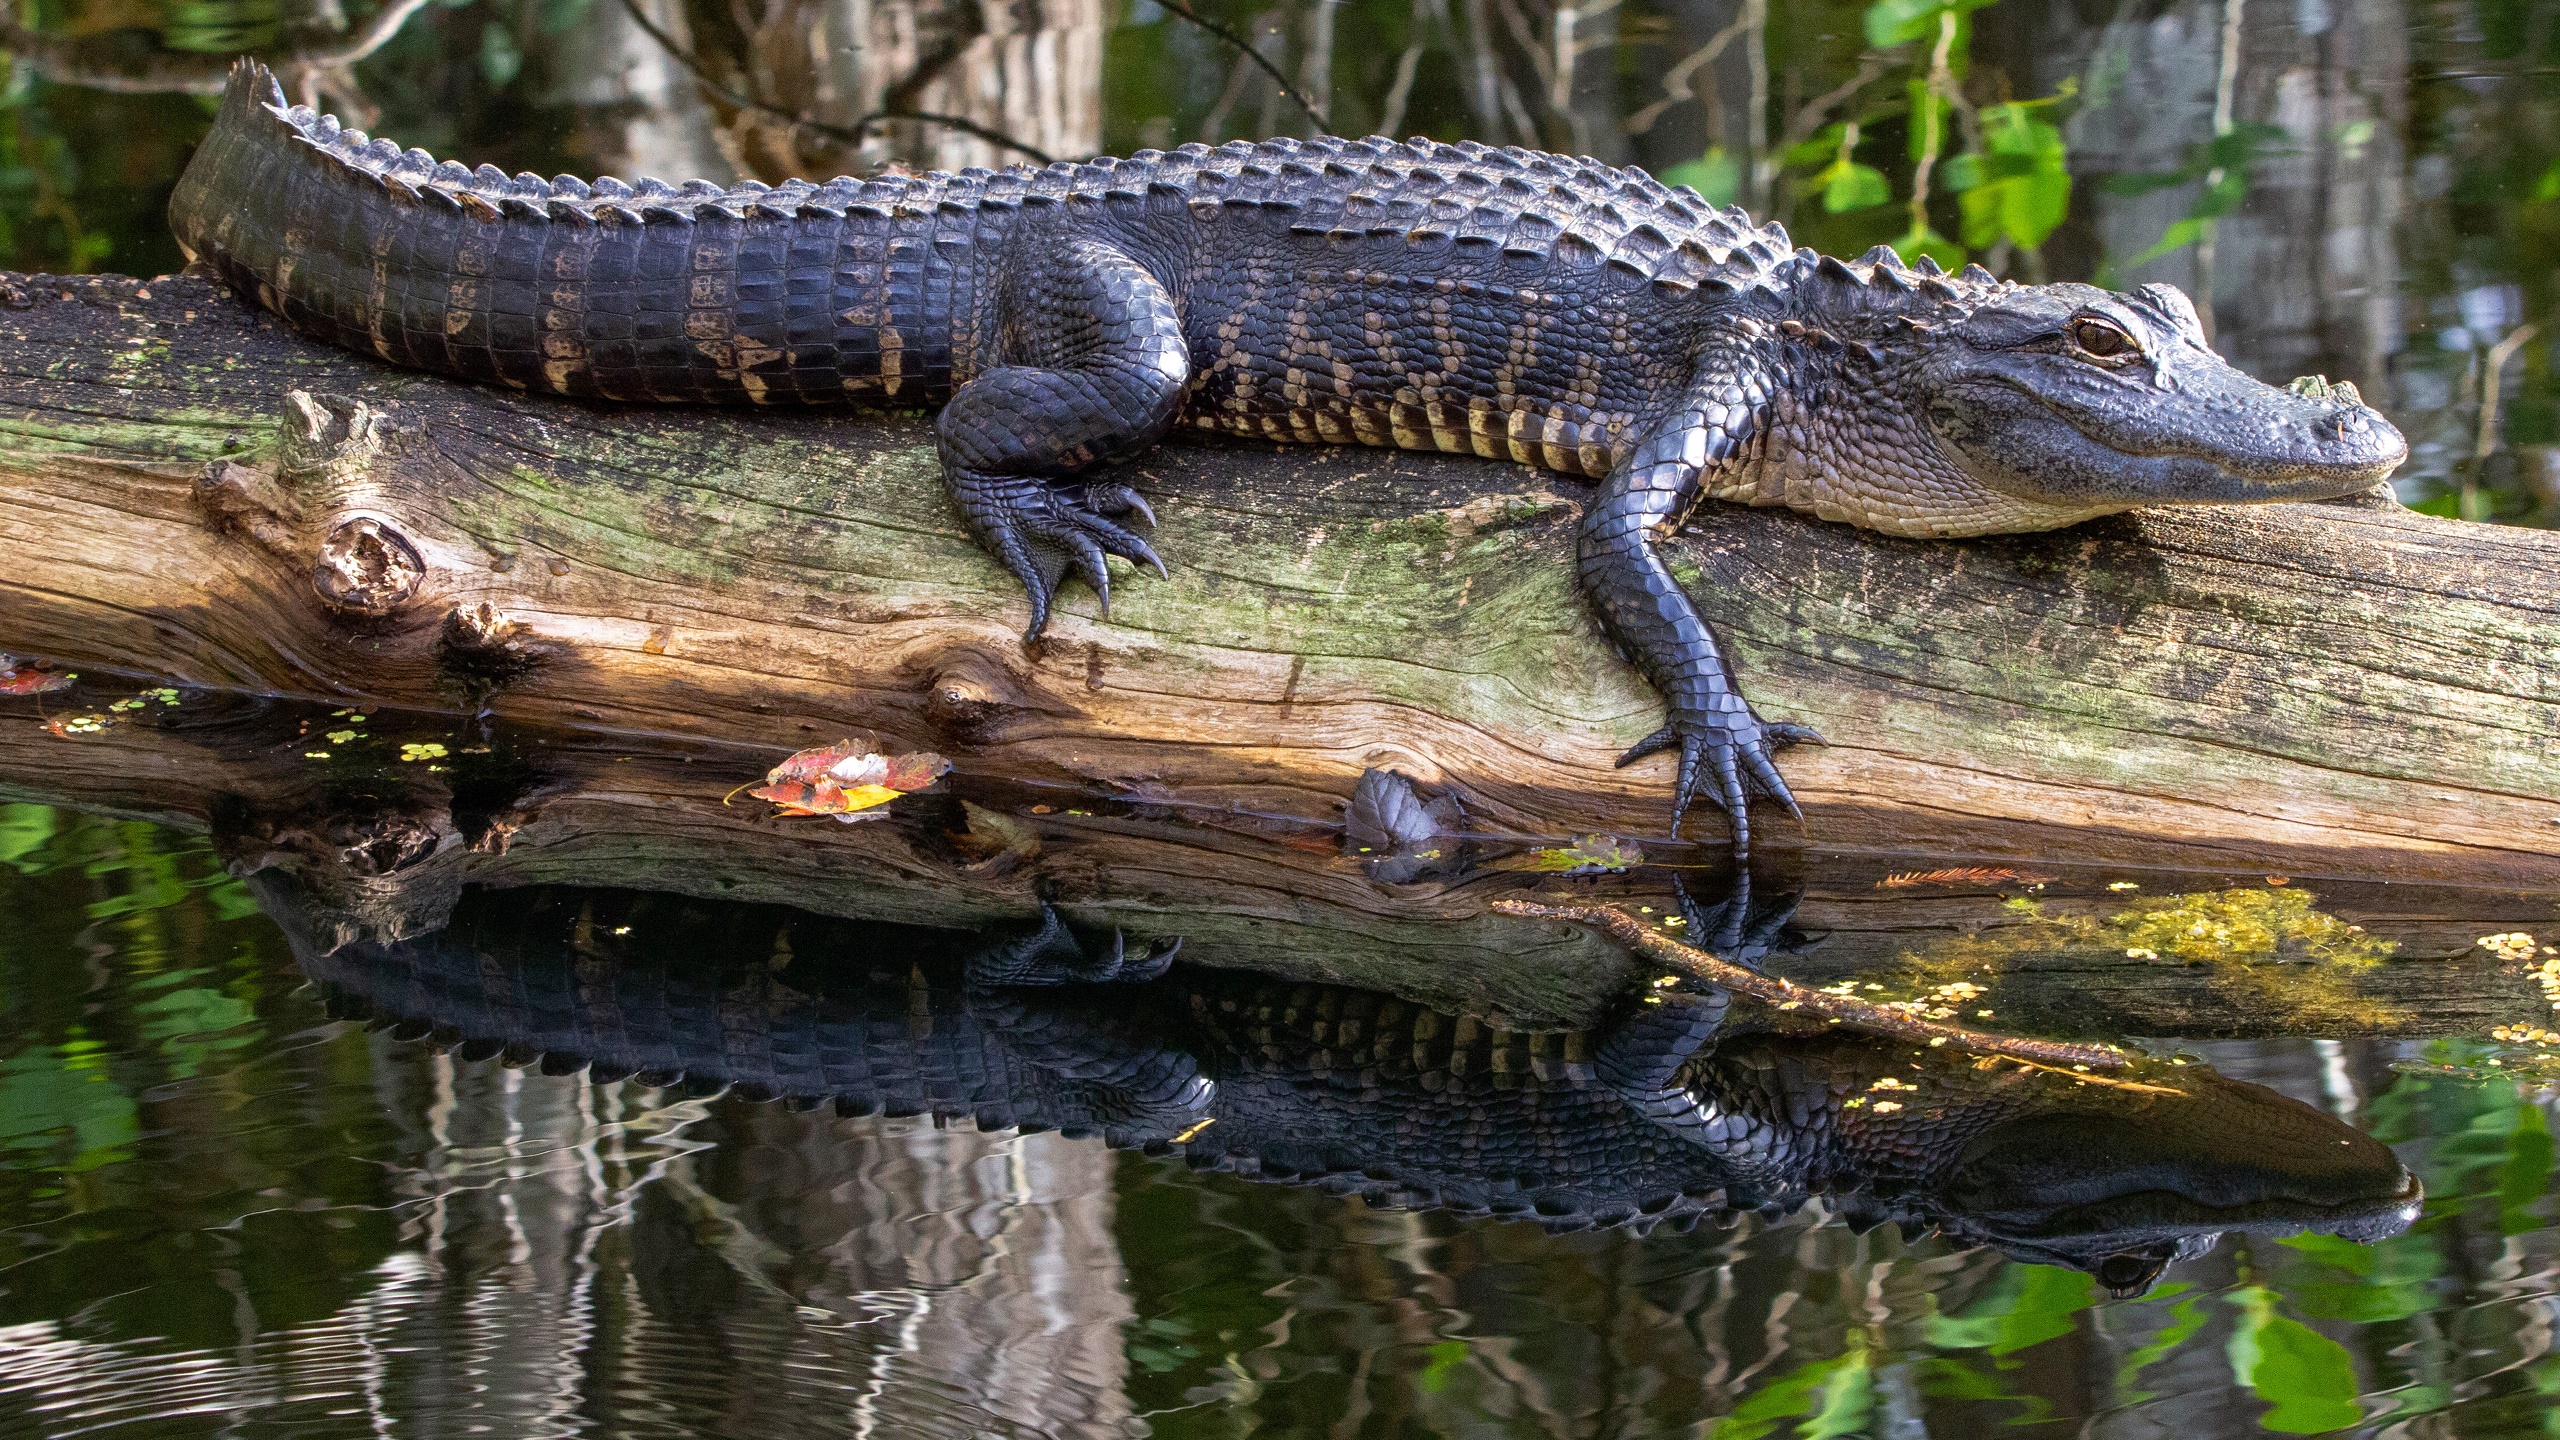 General 2560x1440 animals reptiles crocodiles water reflection